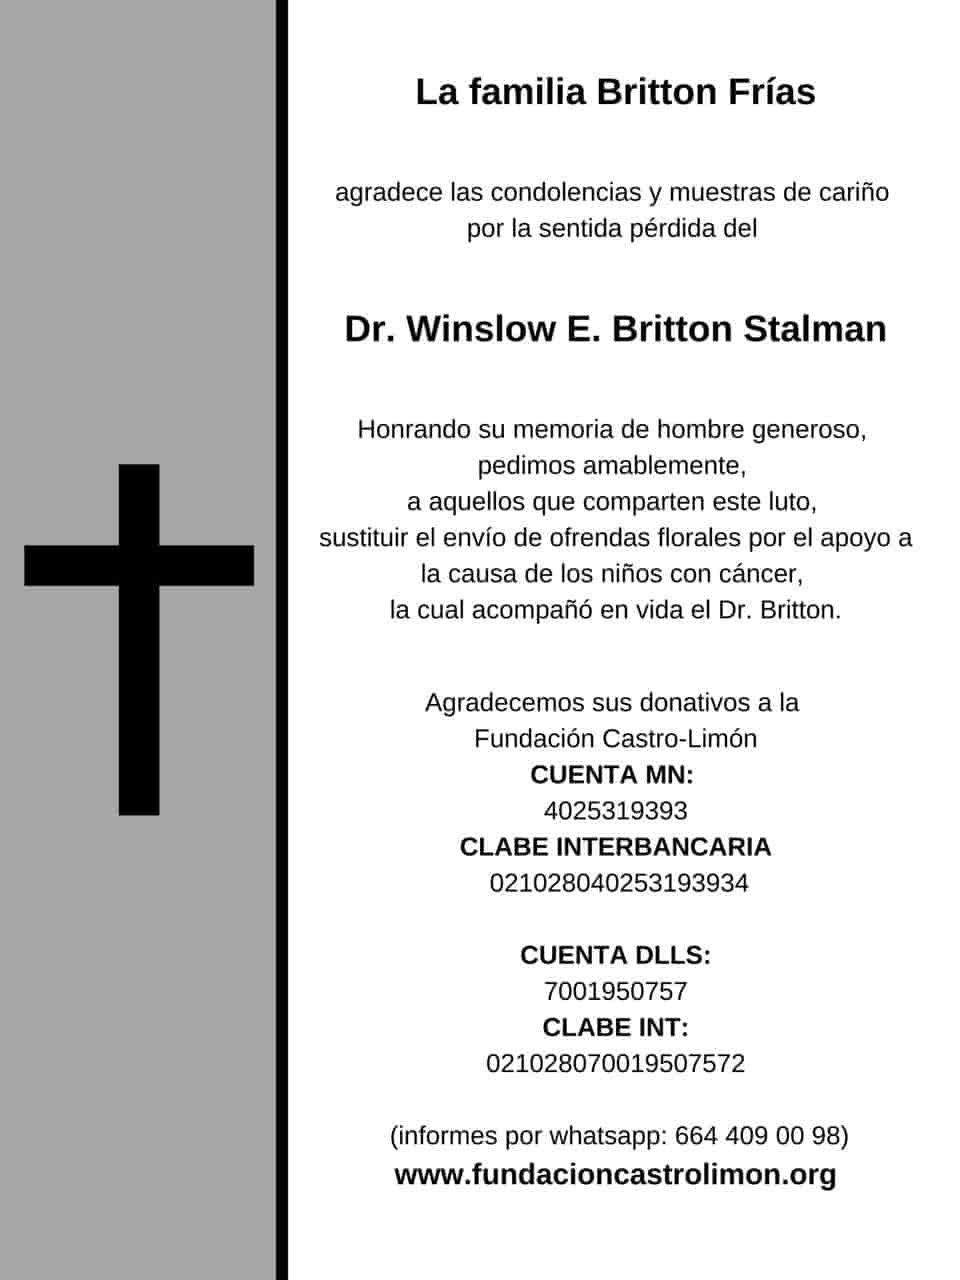 Dr. Winslow E. Britton Stalman